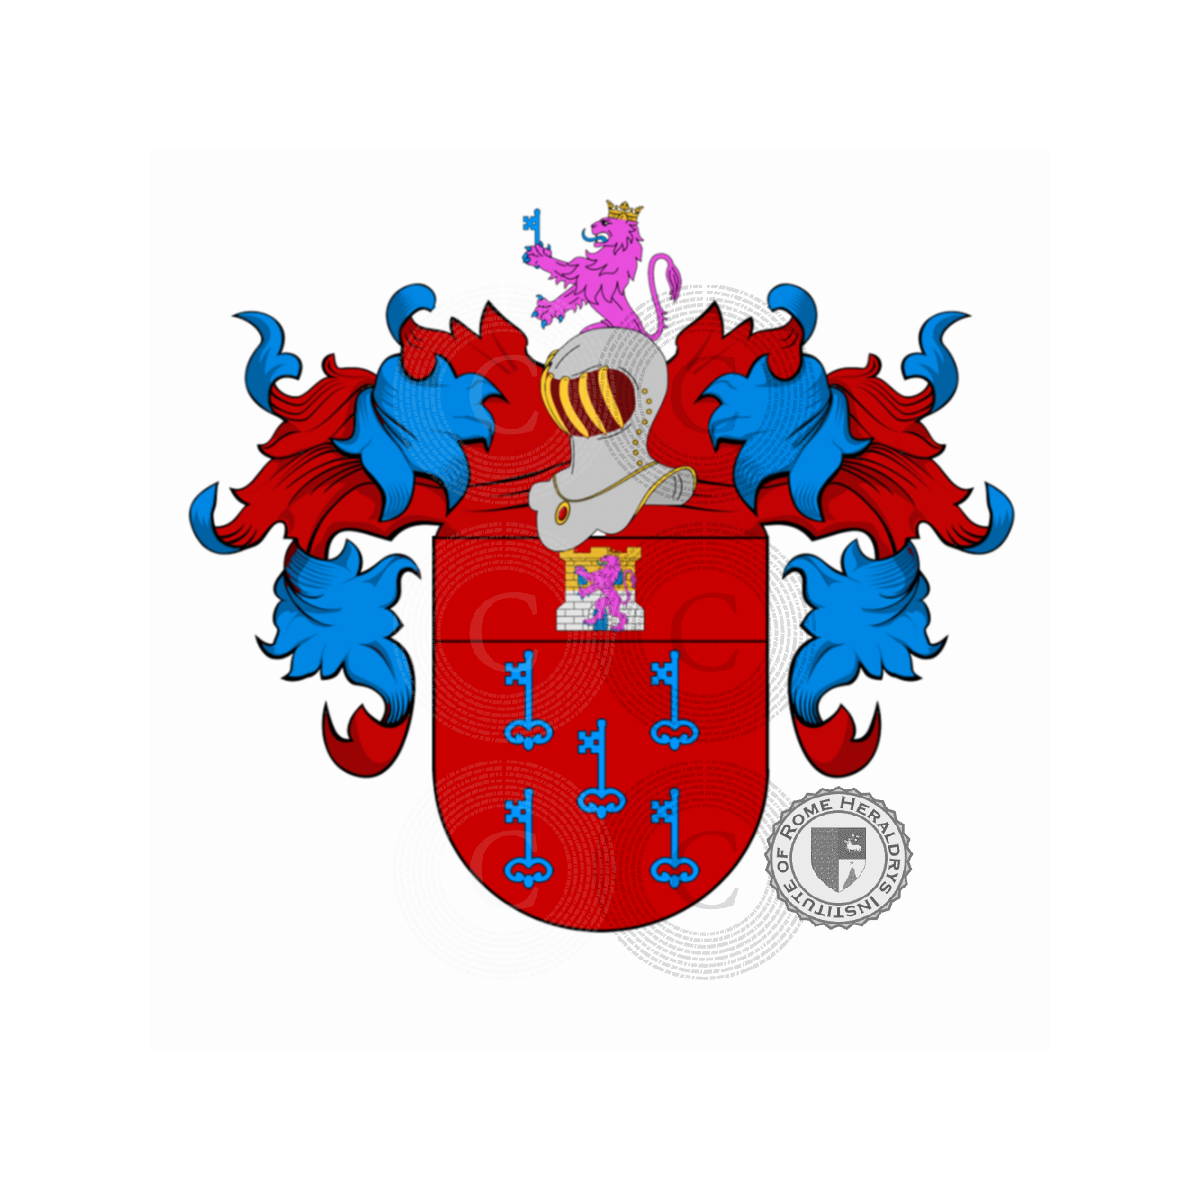 Wappen der FamilieChaves